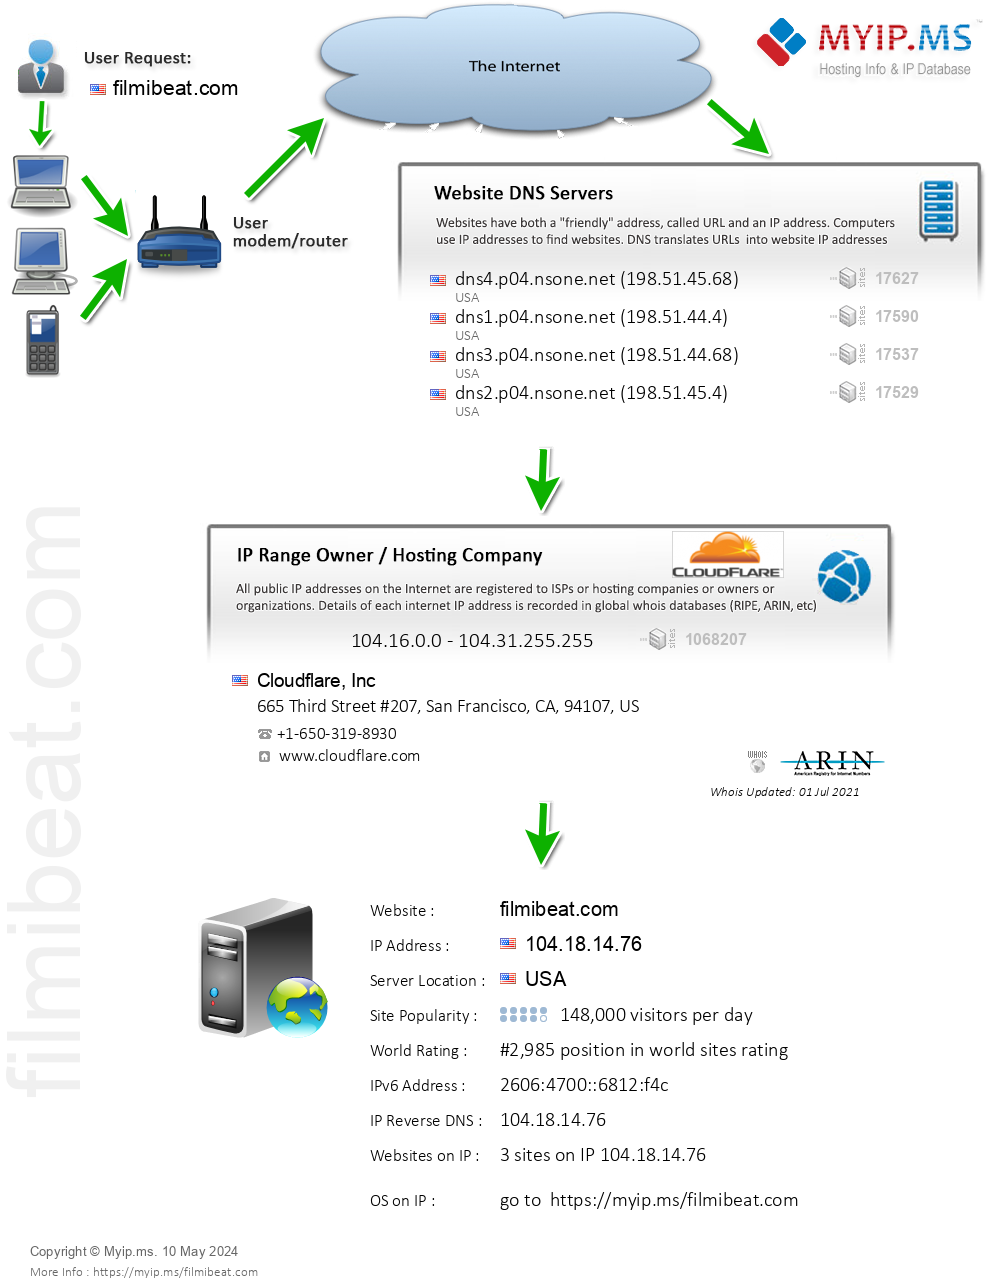 Filmibeat.com - Website Hosting Visual IP Diagram